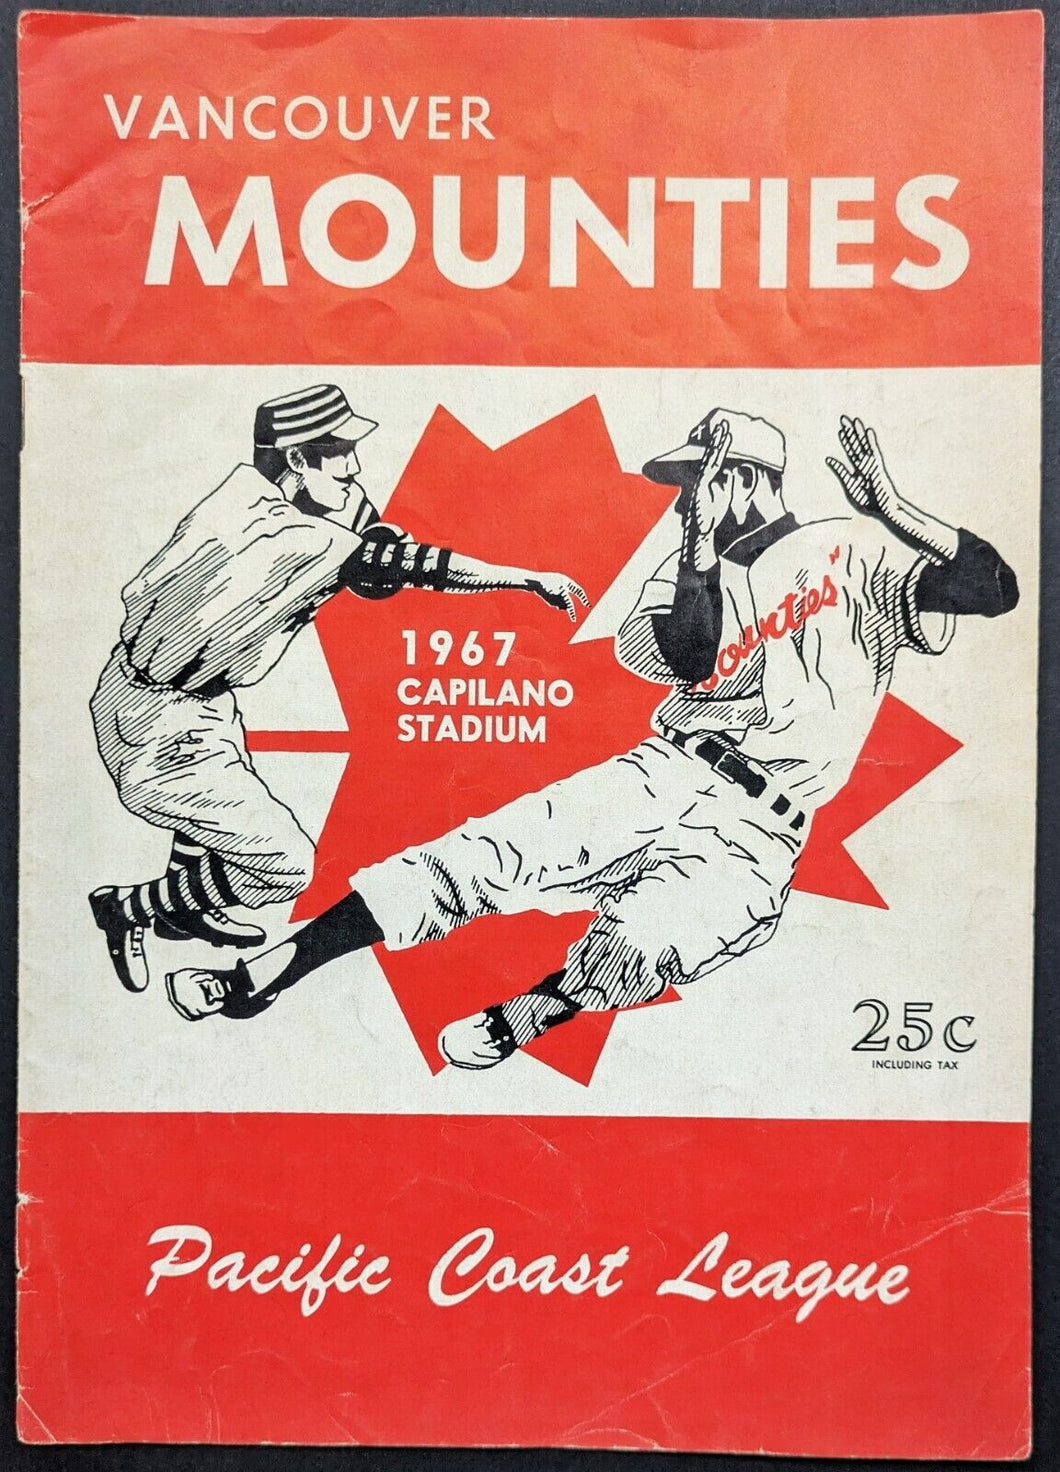 1967 Vancouver Mounties Capilano Stadium Pacific Coast League Baseball Program